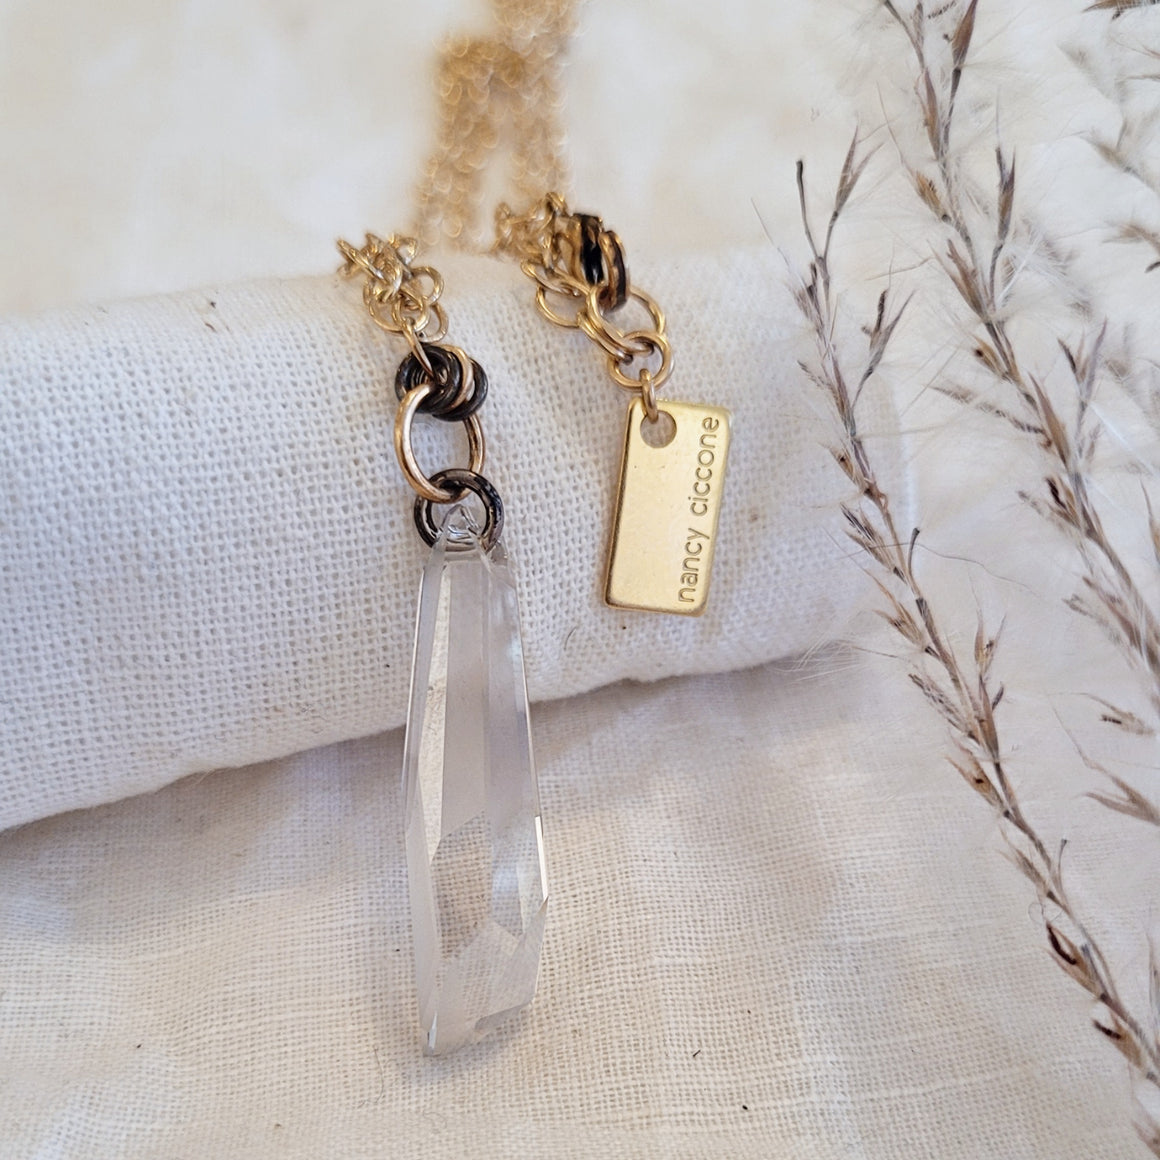 Nancy Cicconi crystal gold filled pendant